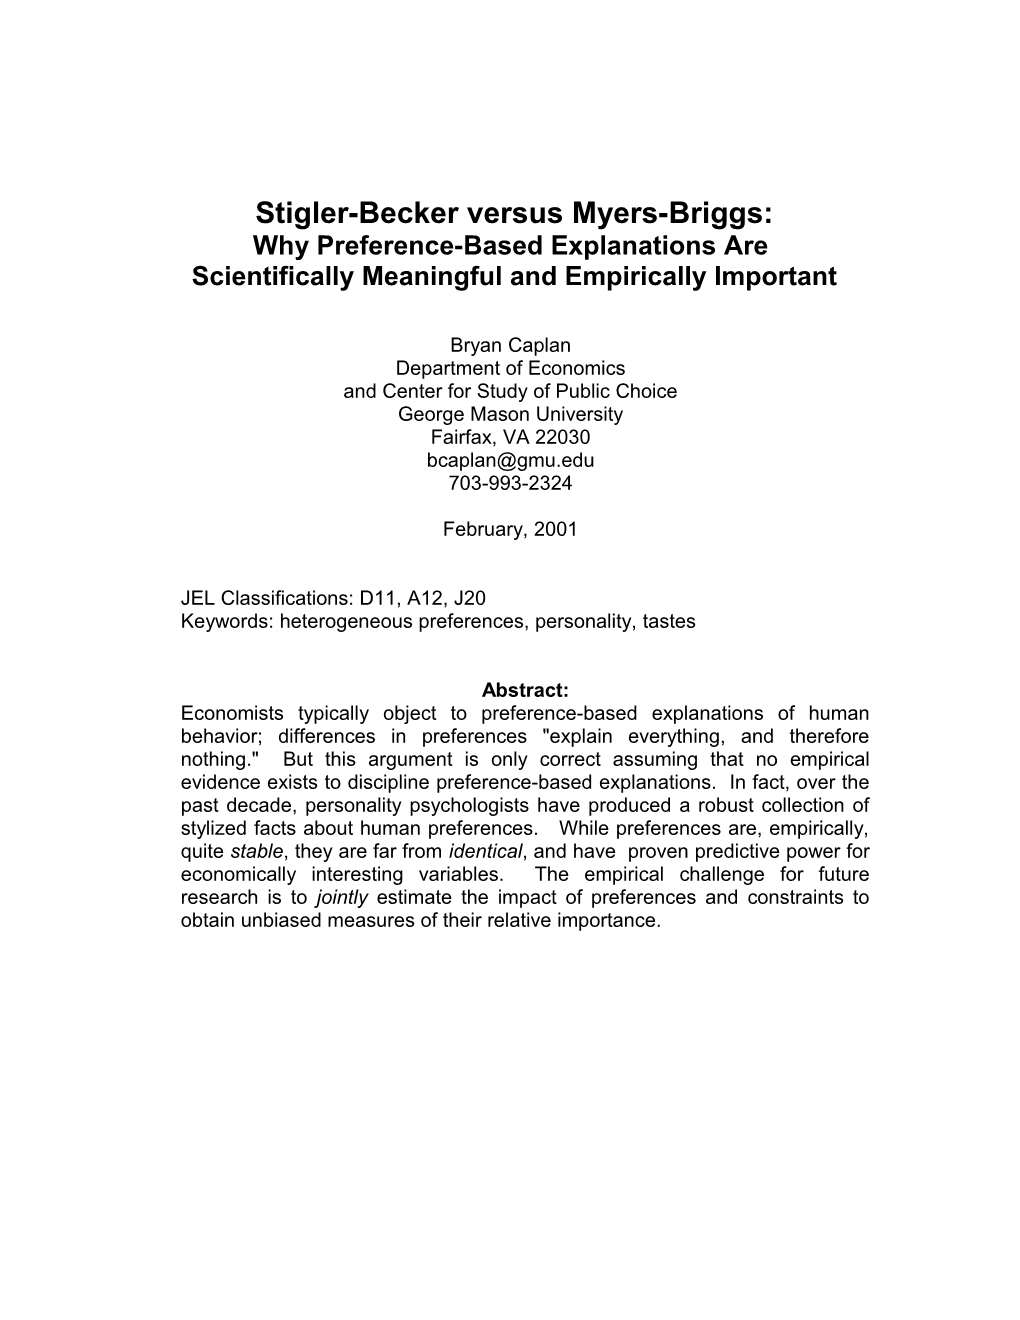 Stigler-Becker Versus Myers-Briggs